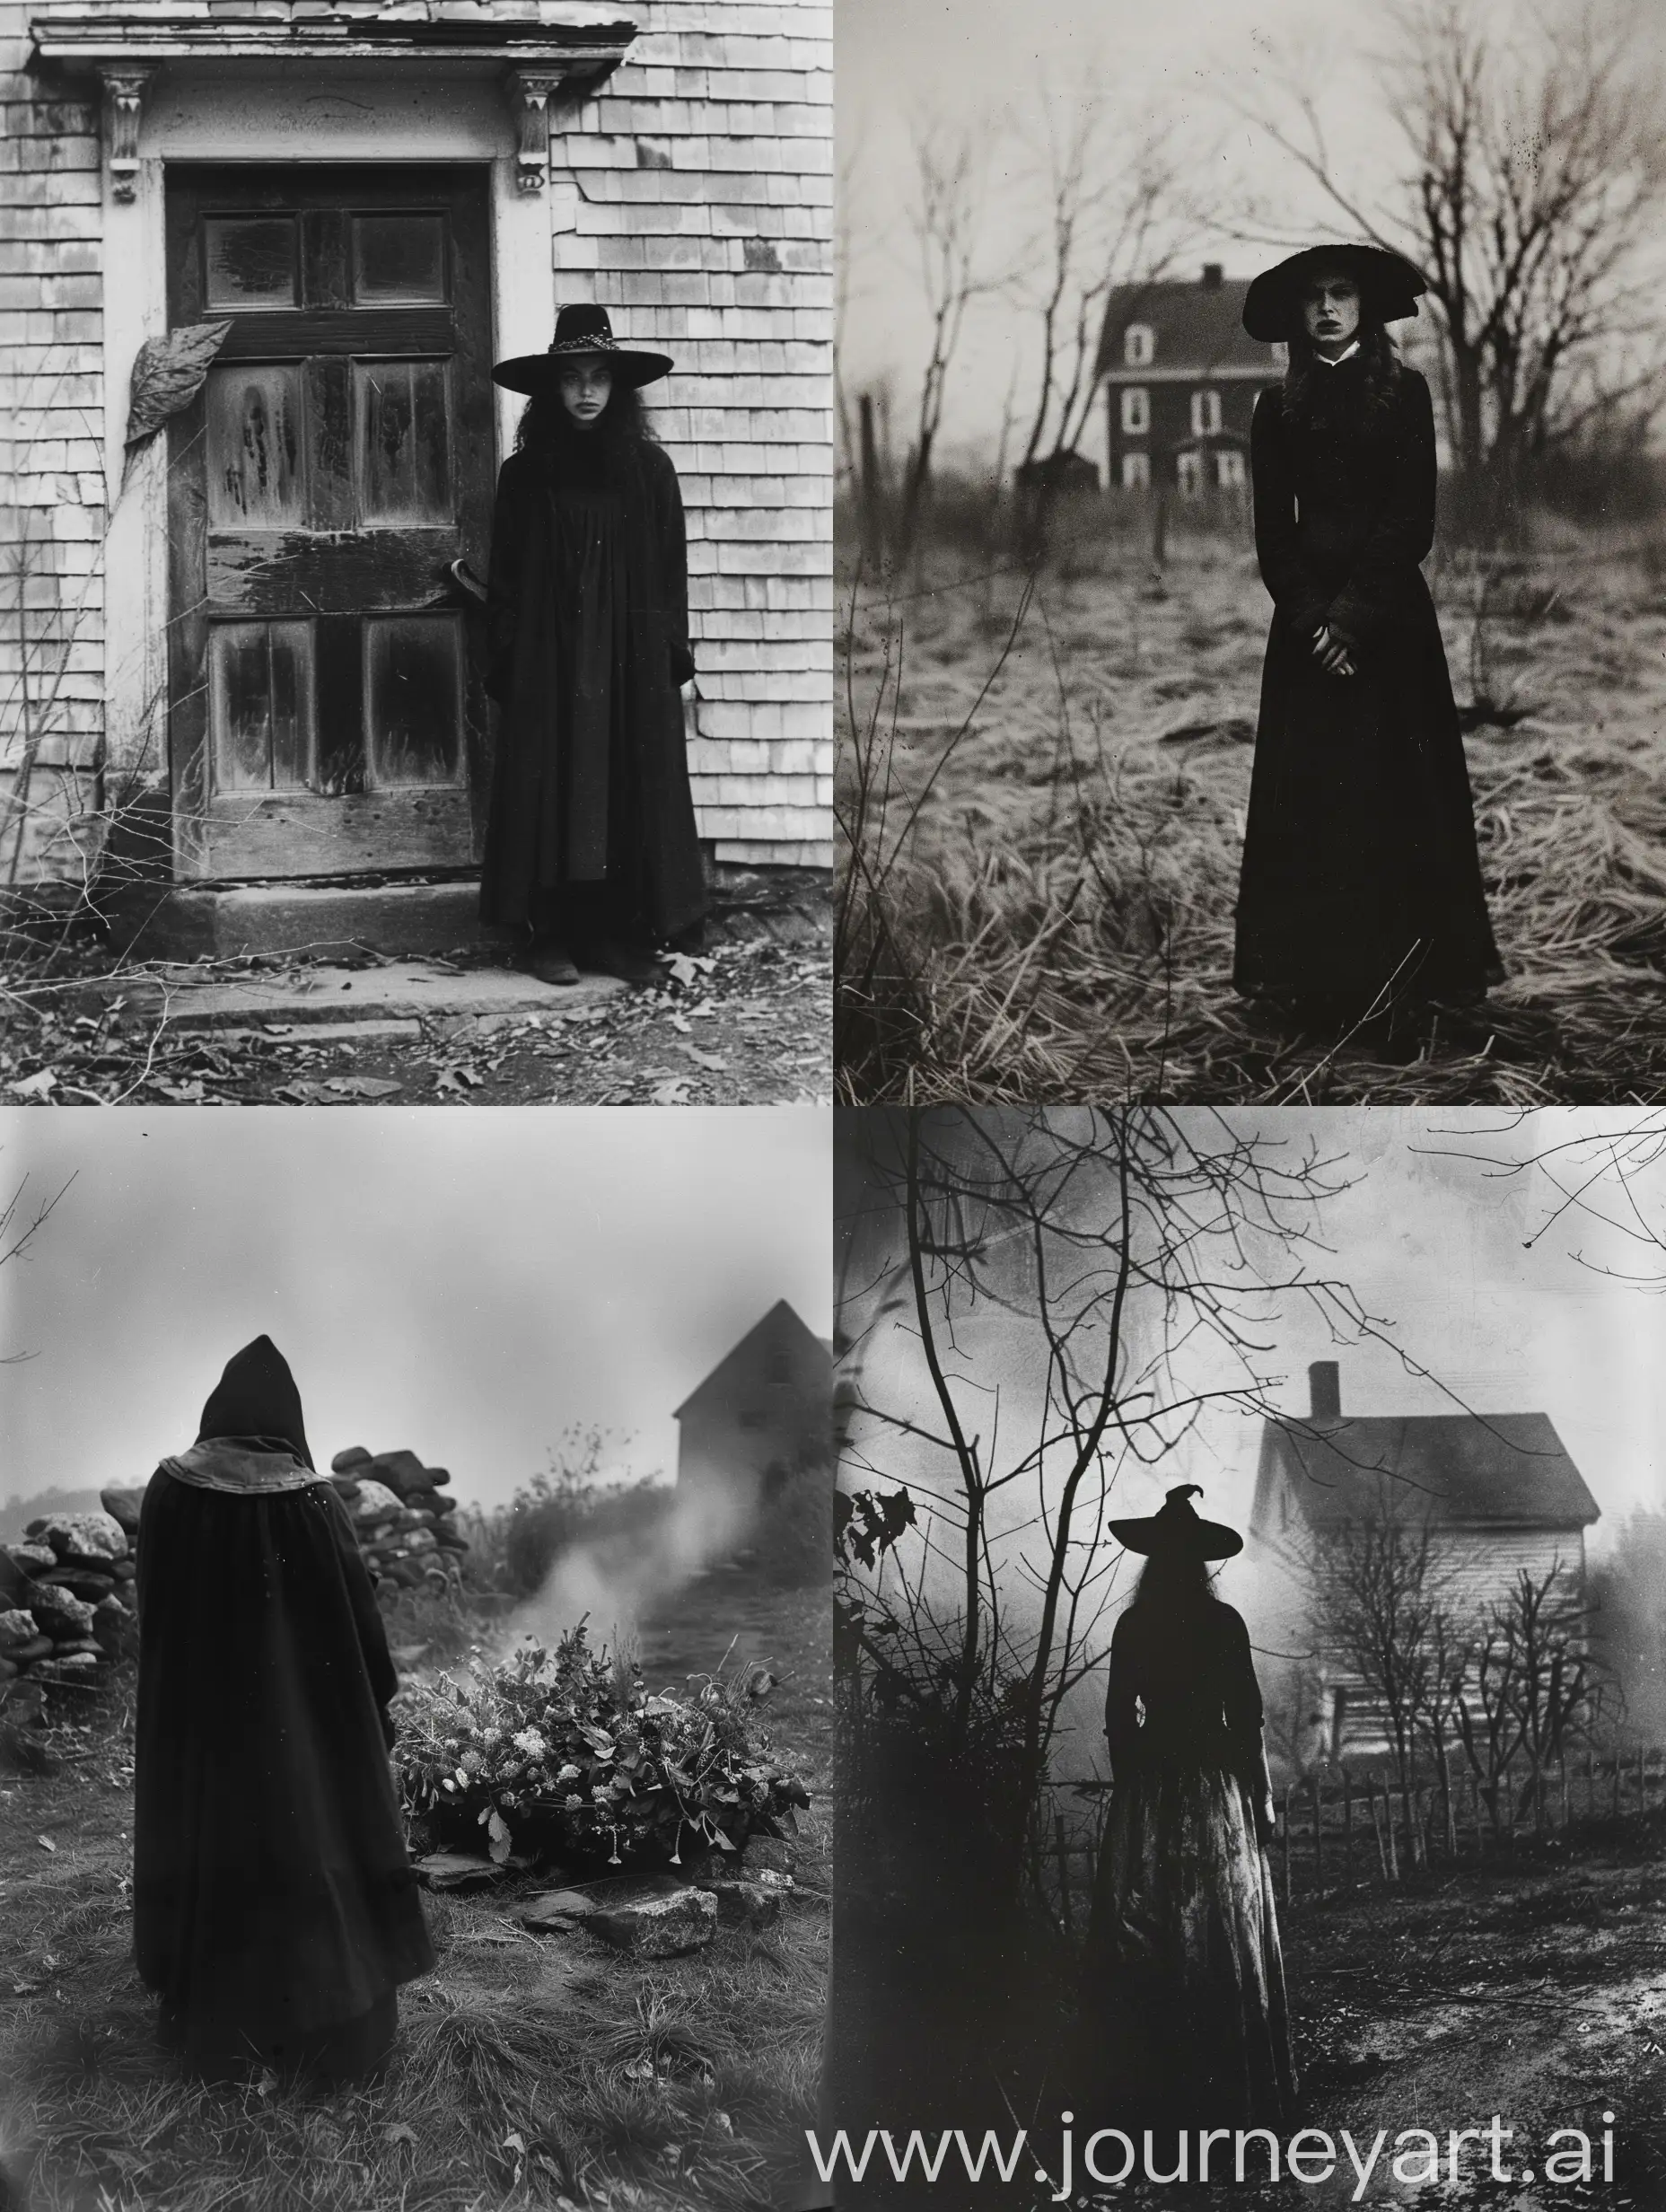 Salem-Witch-Trials-Reenactment-Haunting-Grayscale-Folk-Horror-Scene